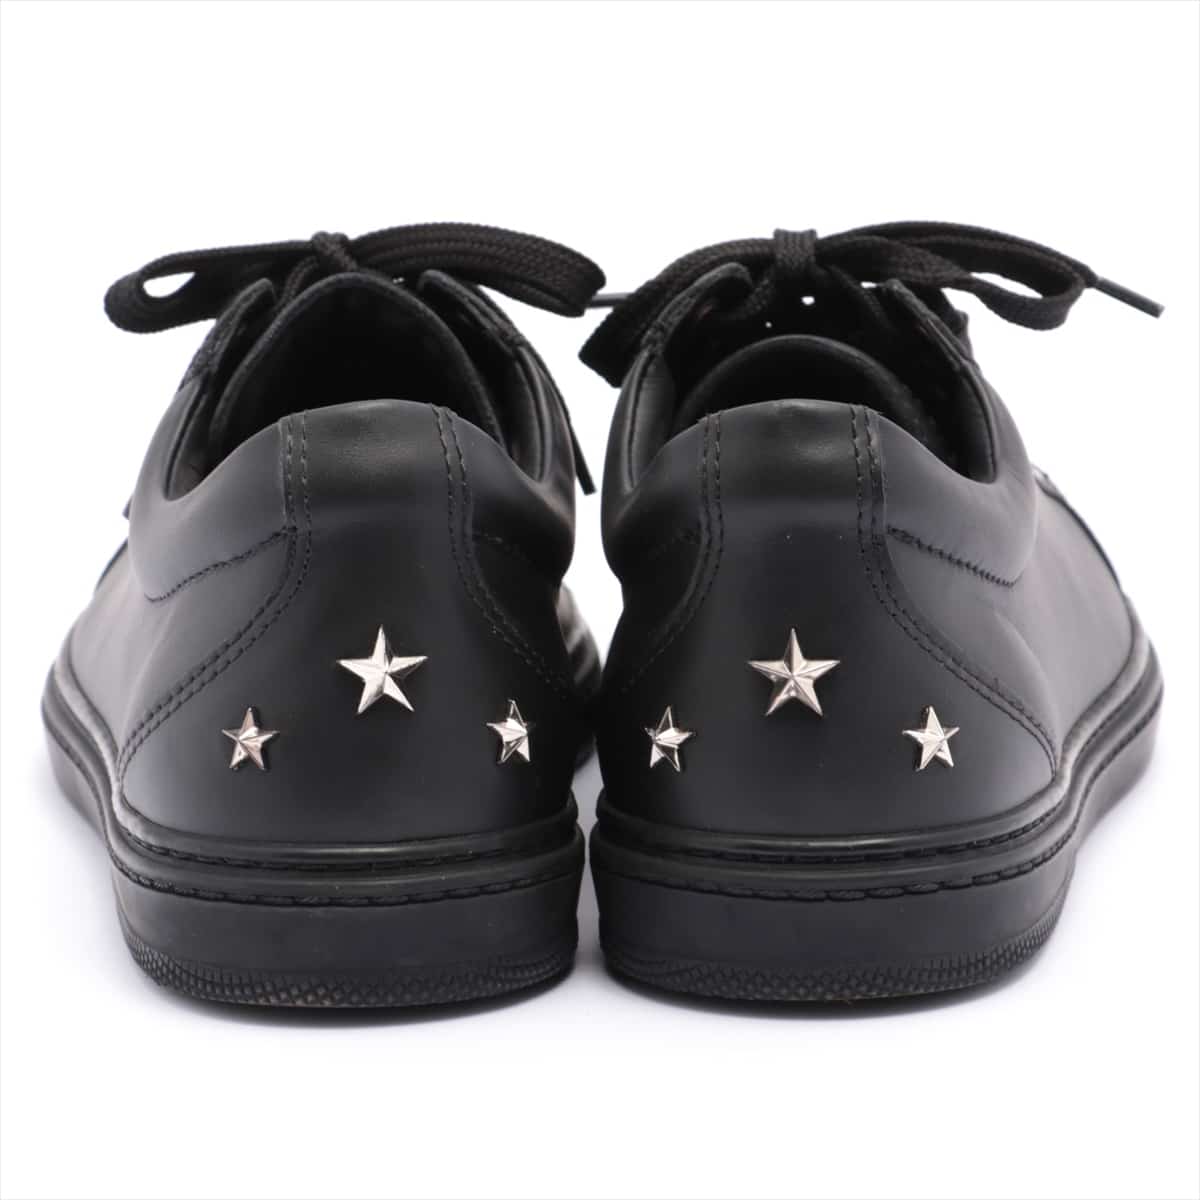 Jimmy Choo Leather Sneakers 40 Men's Black Star studs